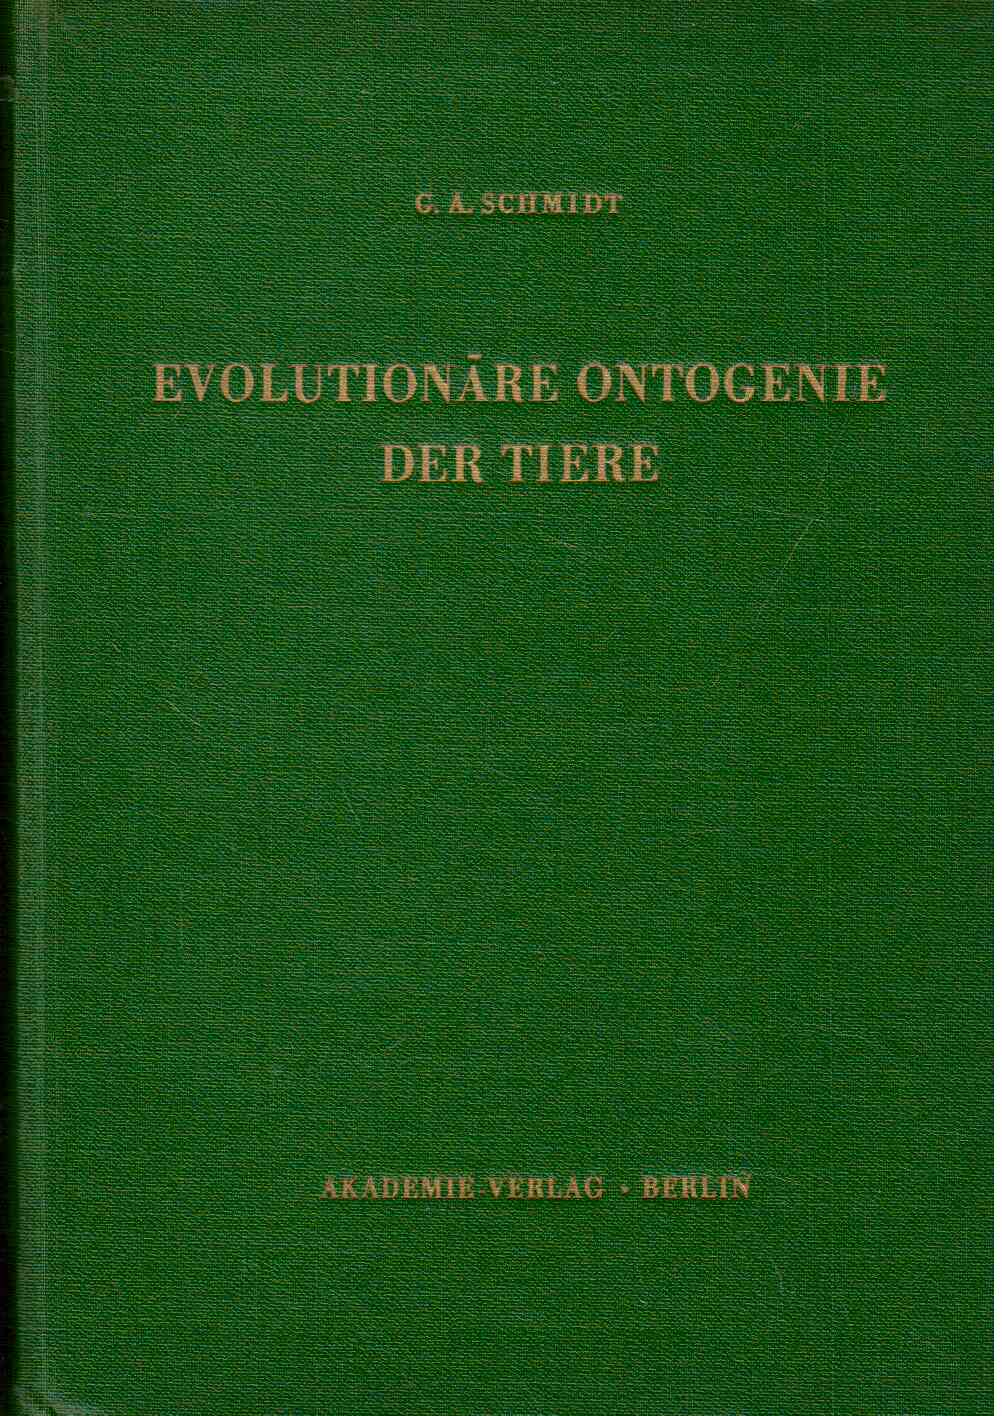 Evolutionäre Ontogenie der Tiere.